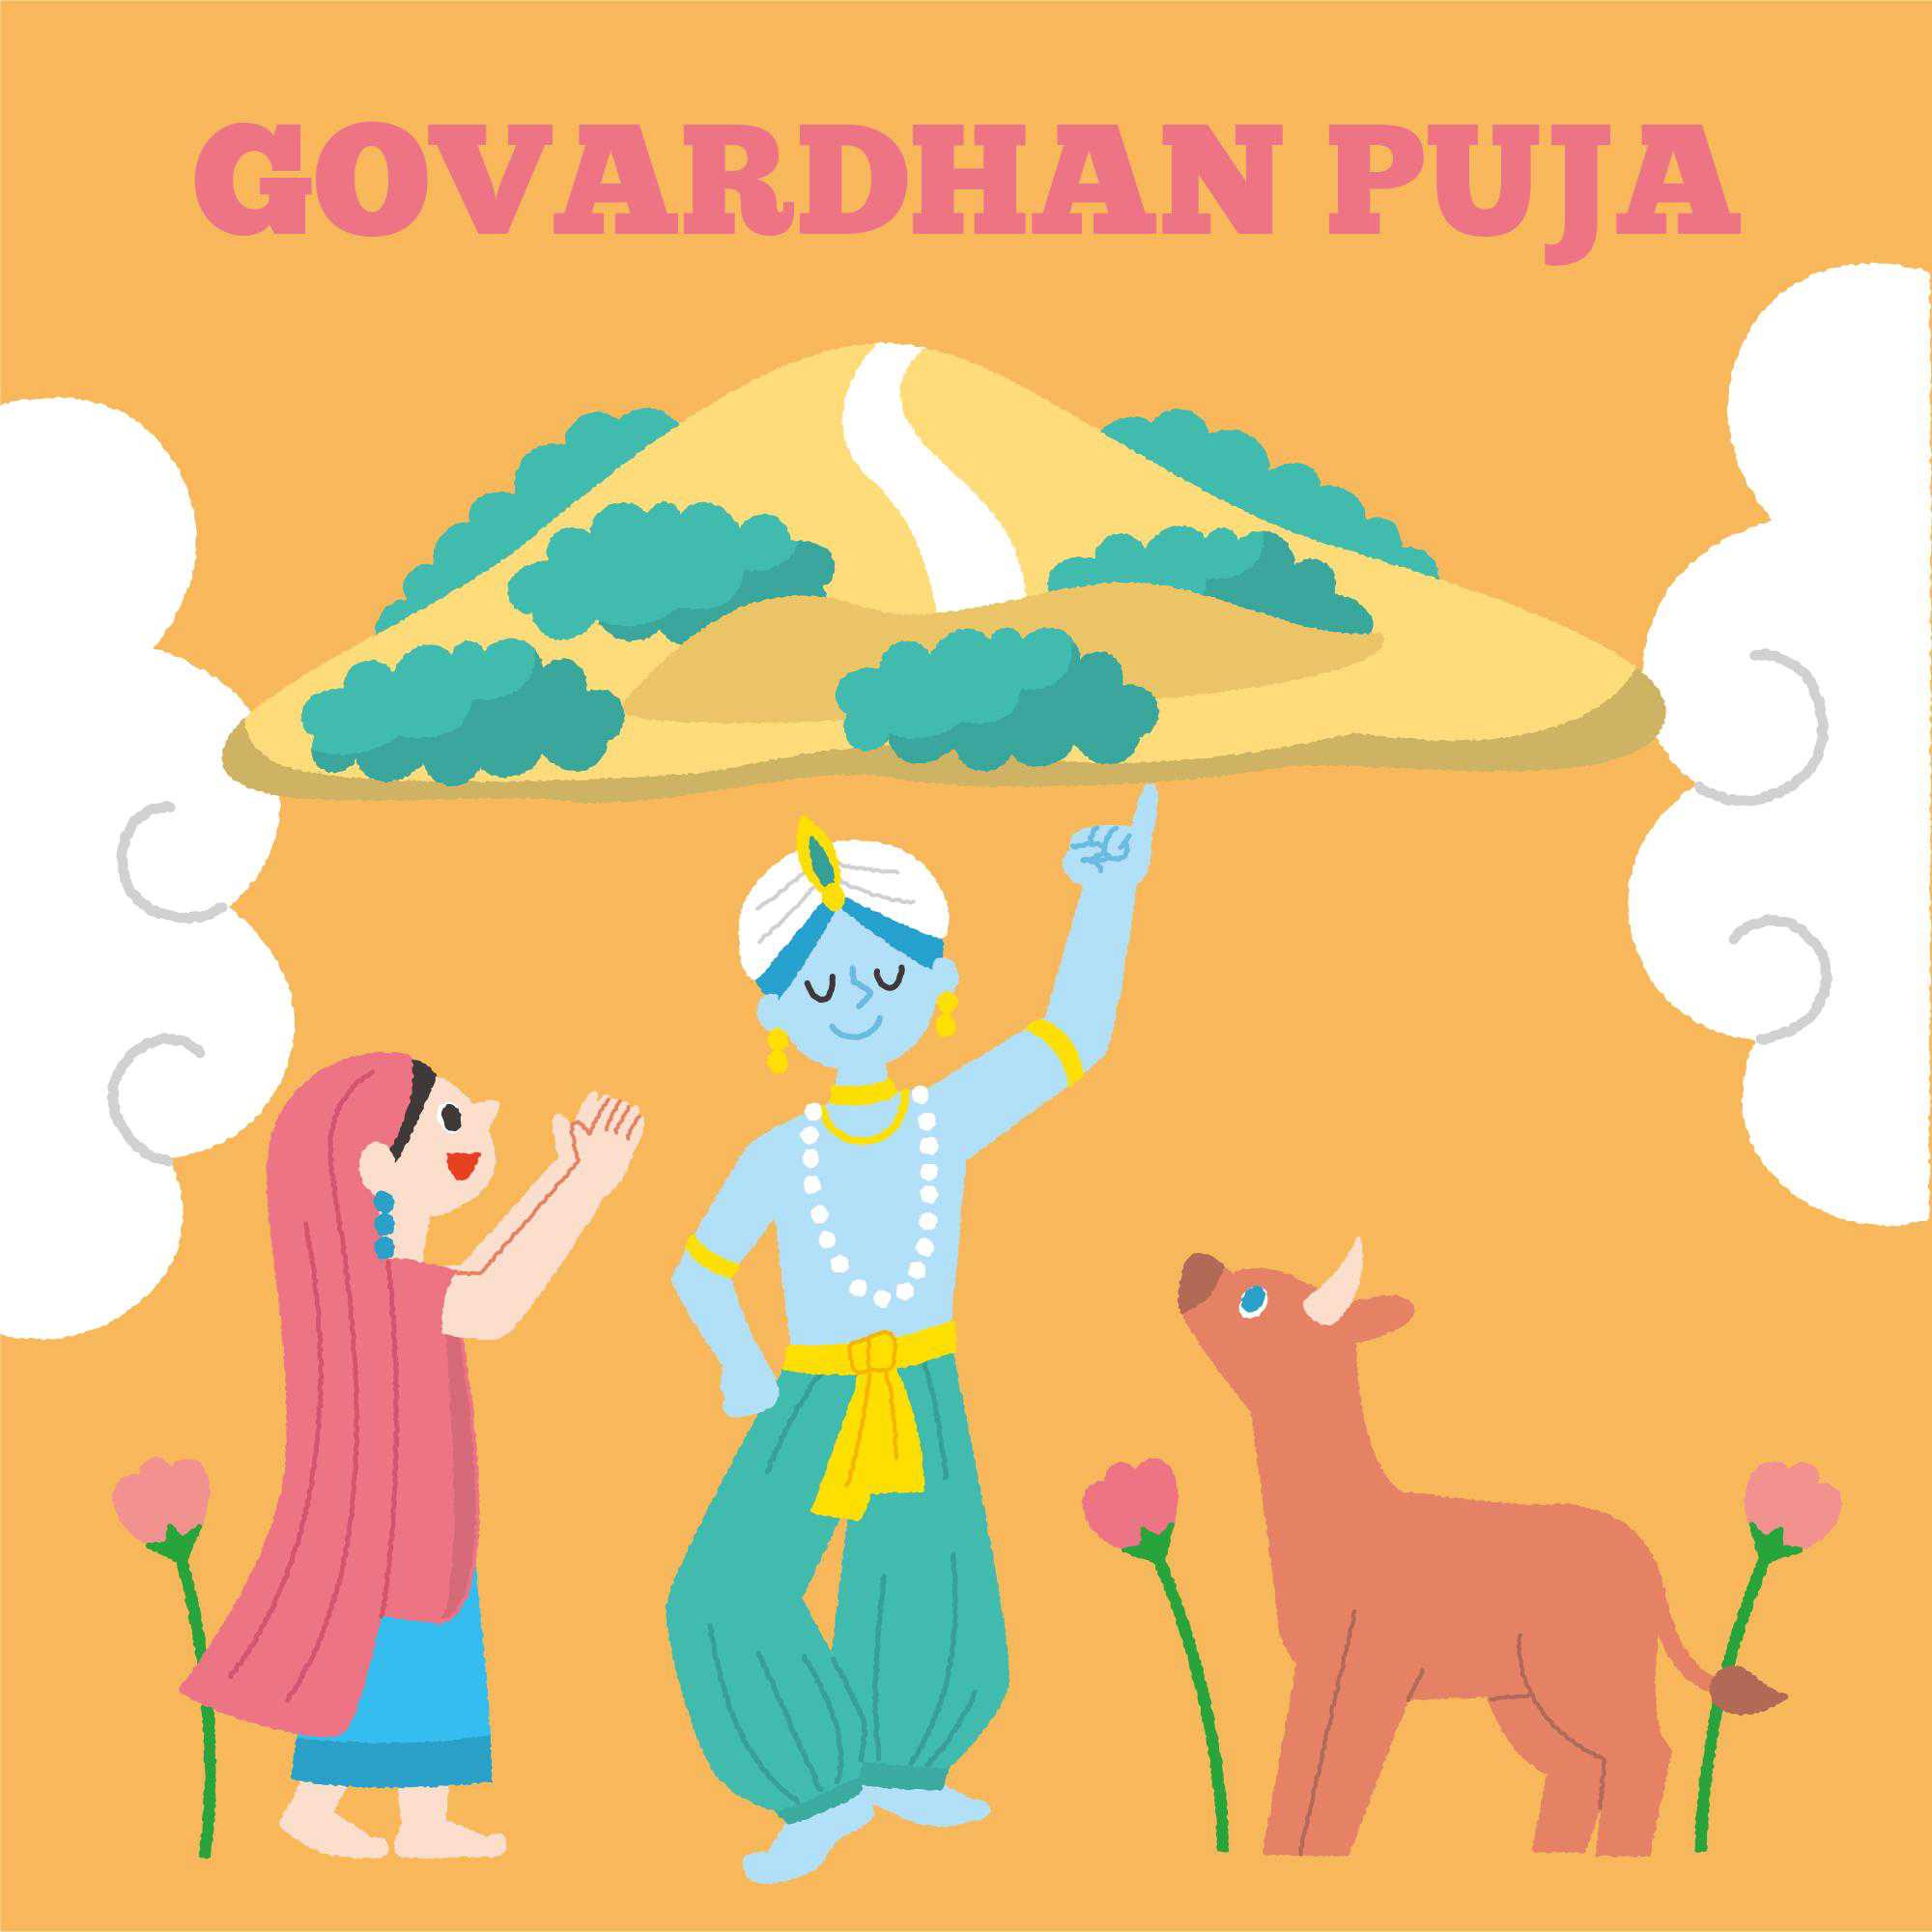 Happy Govardhan puja pics download